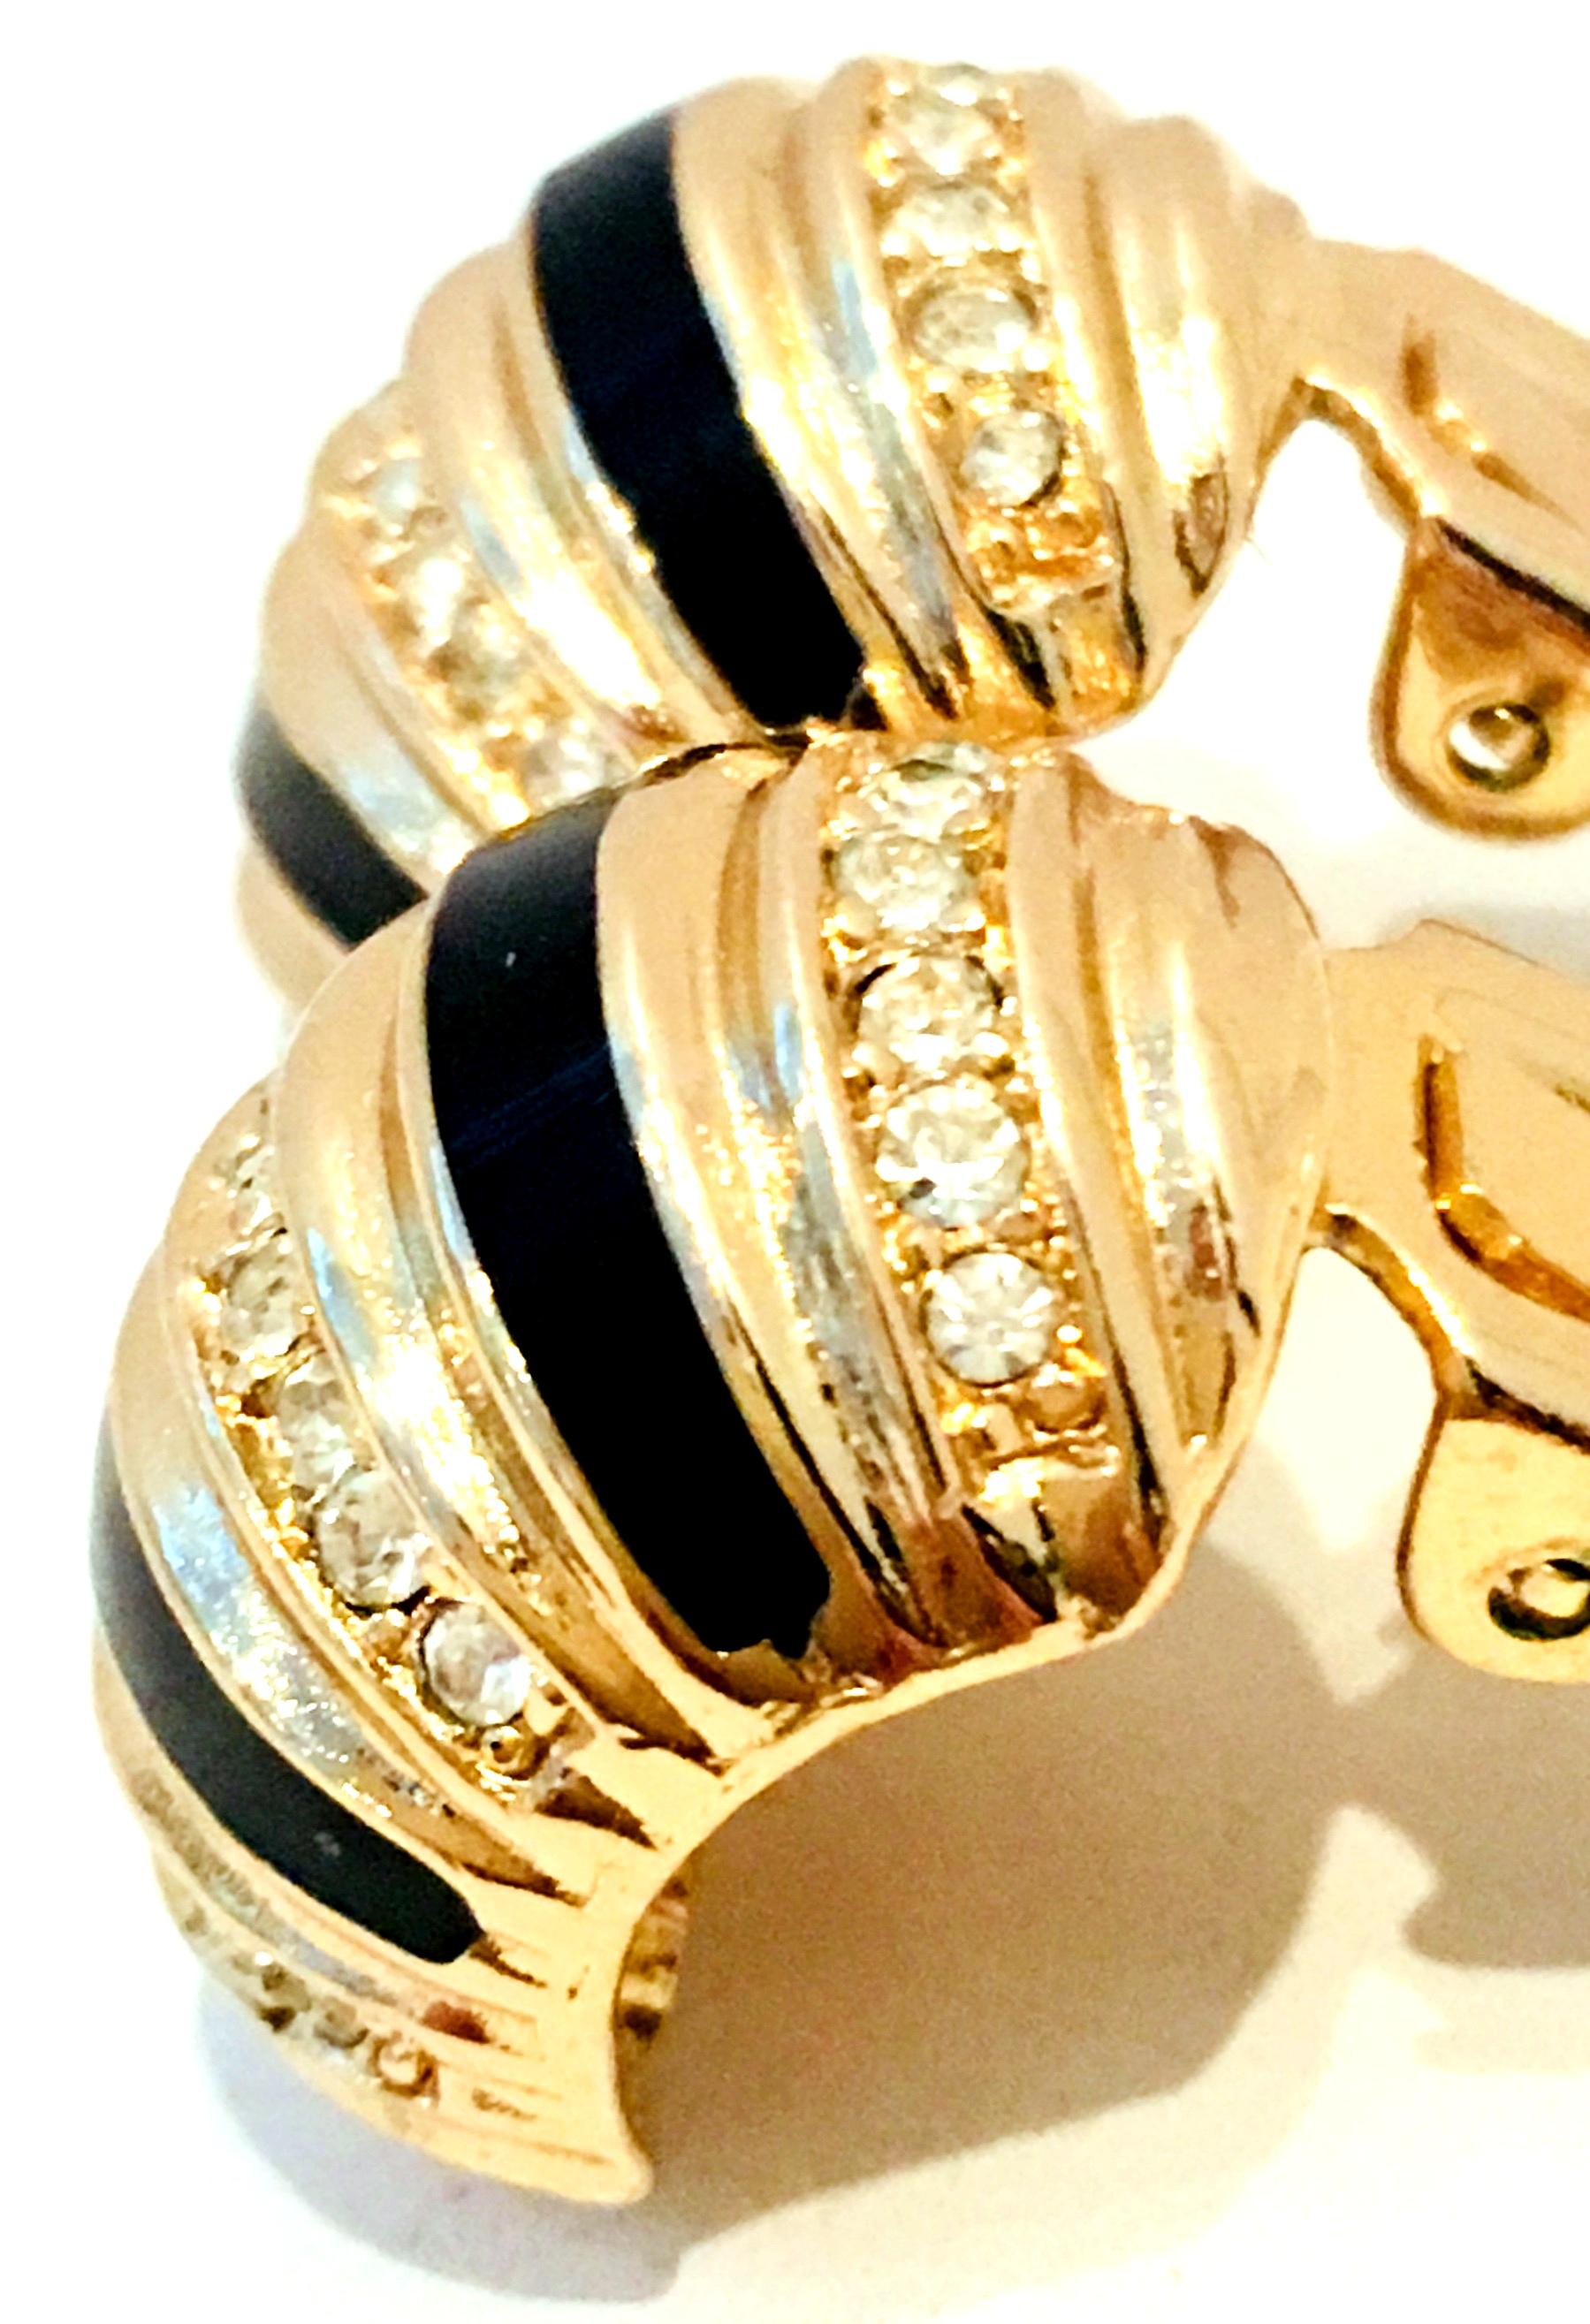 20th Century Pair Of Gold, Enamel & Austrian Crystal Earrings By, Christian Dior 1